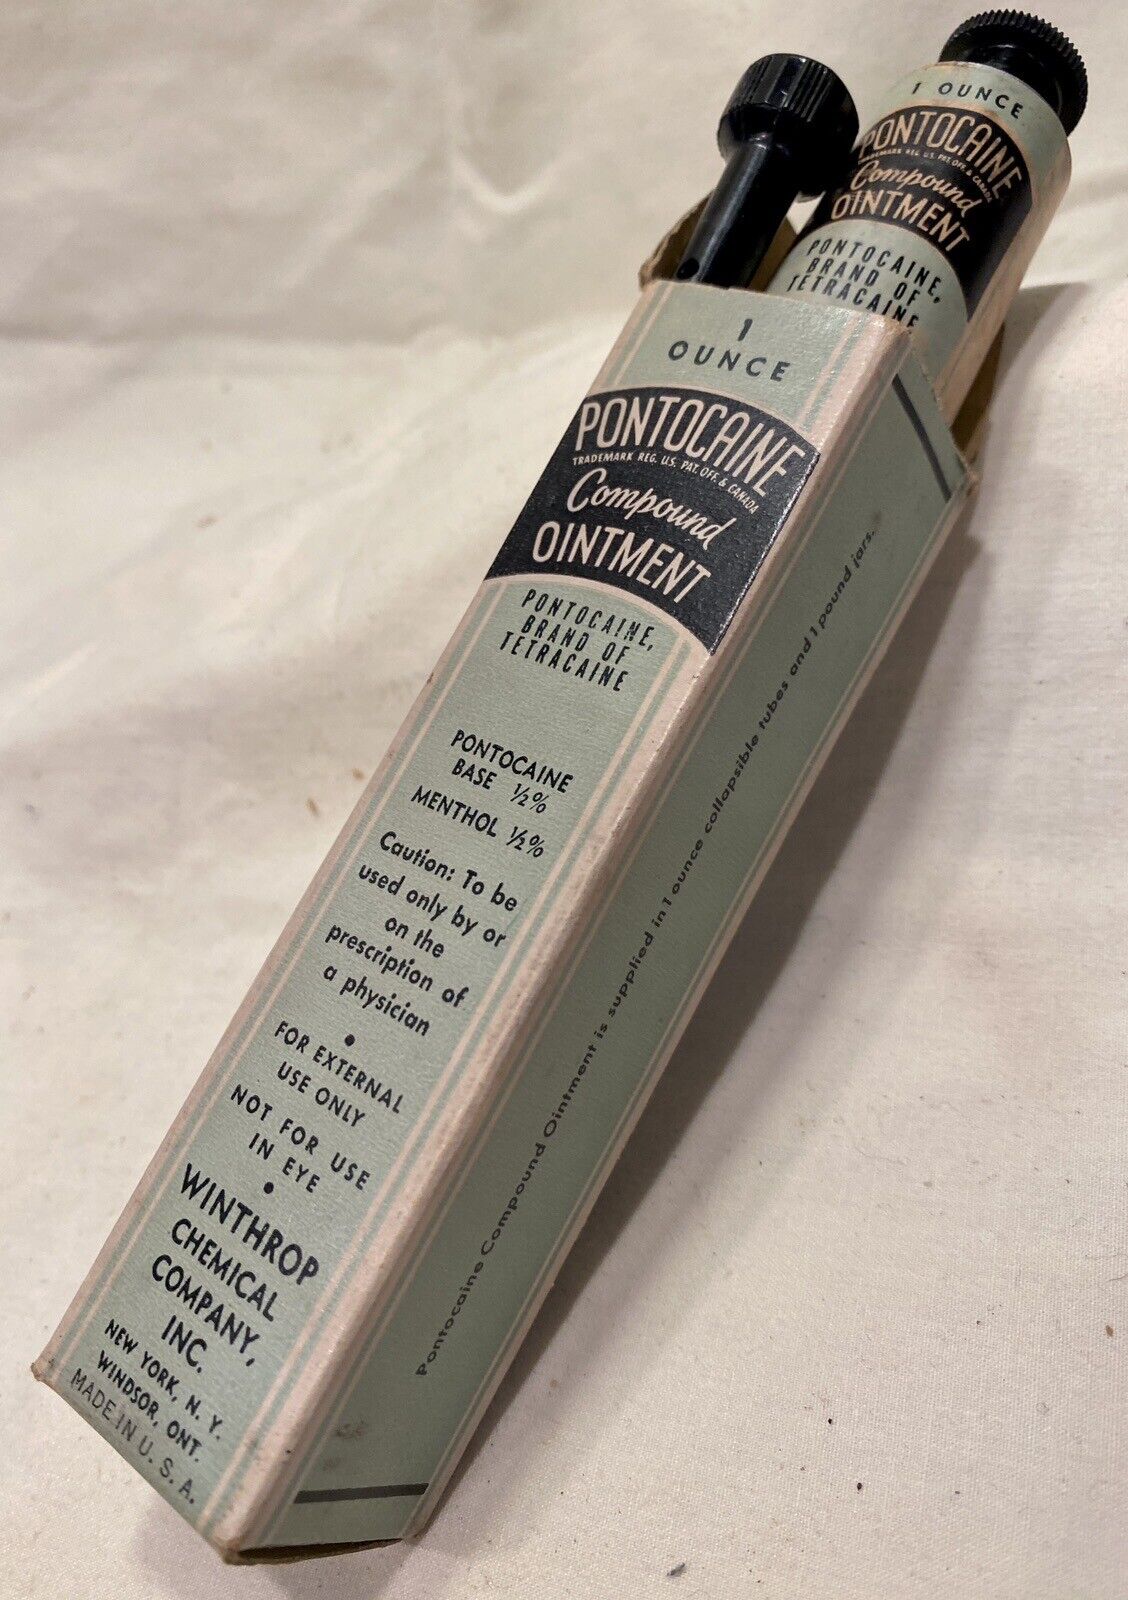 Collectible Antique/Vintage Pontocaine Ointment W/Box Winthrop Chemical Co. Inc